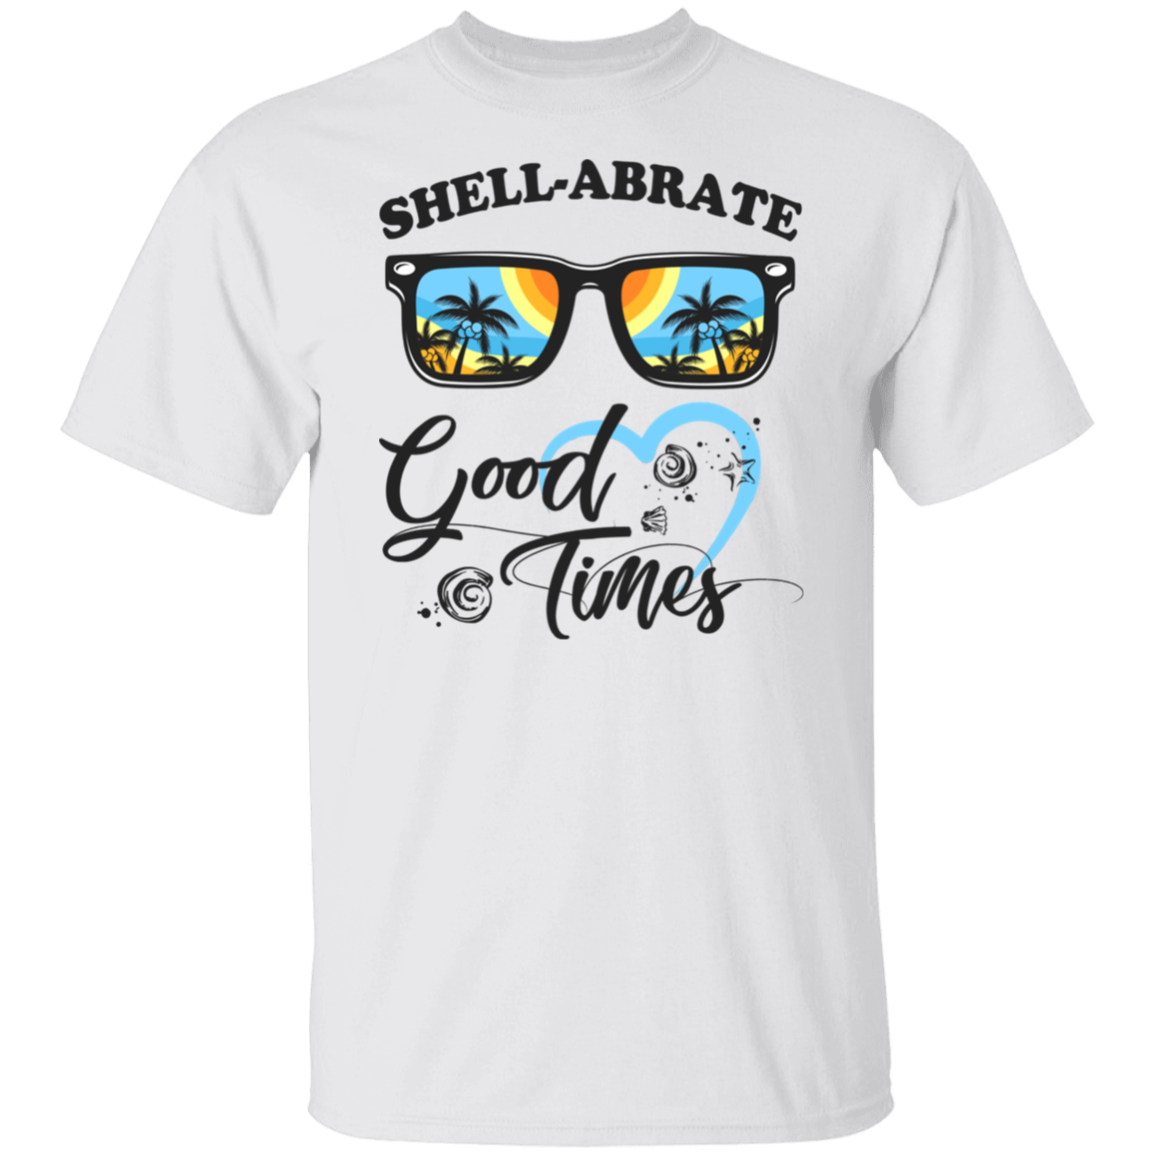 Shell-Abrate Good Times | white T-Shirt